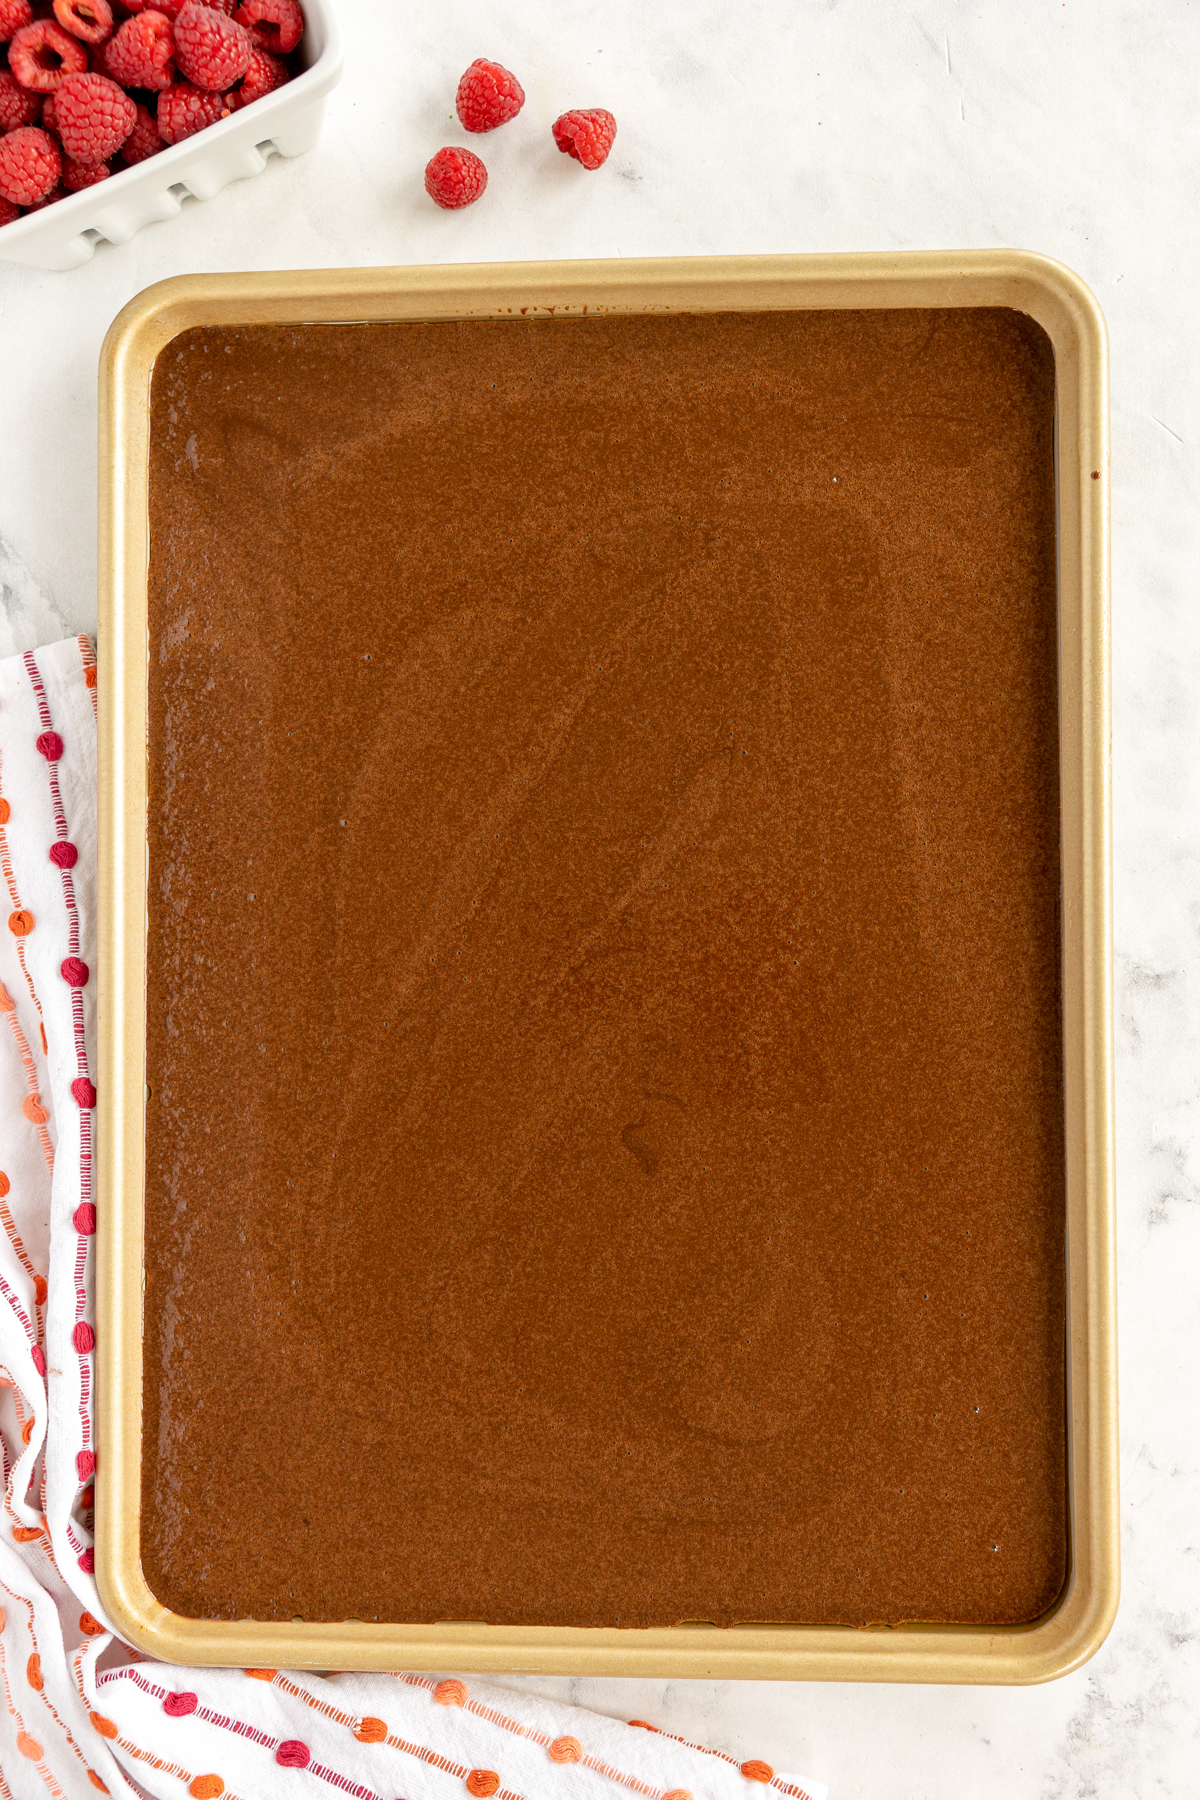 chocolate cake batter in a sheet pan